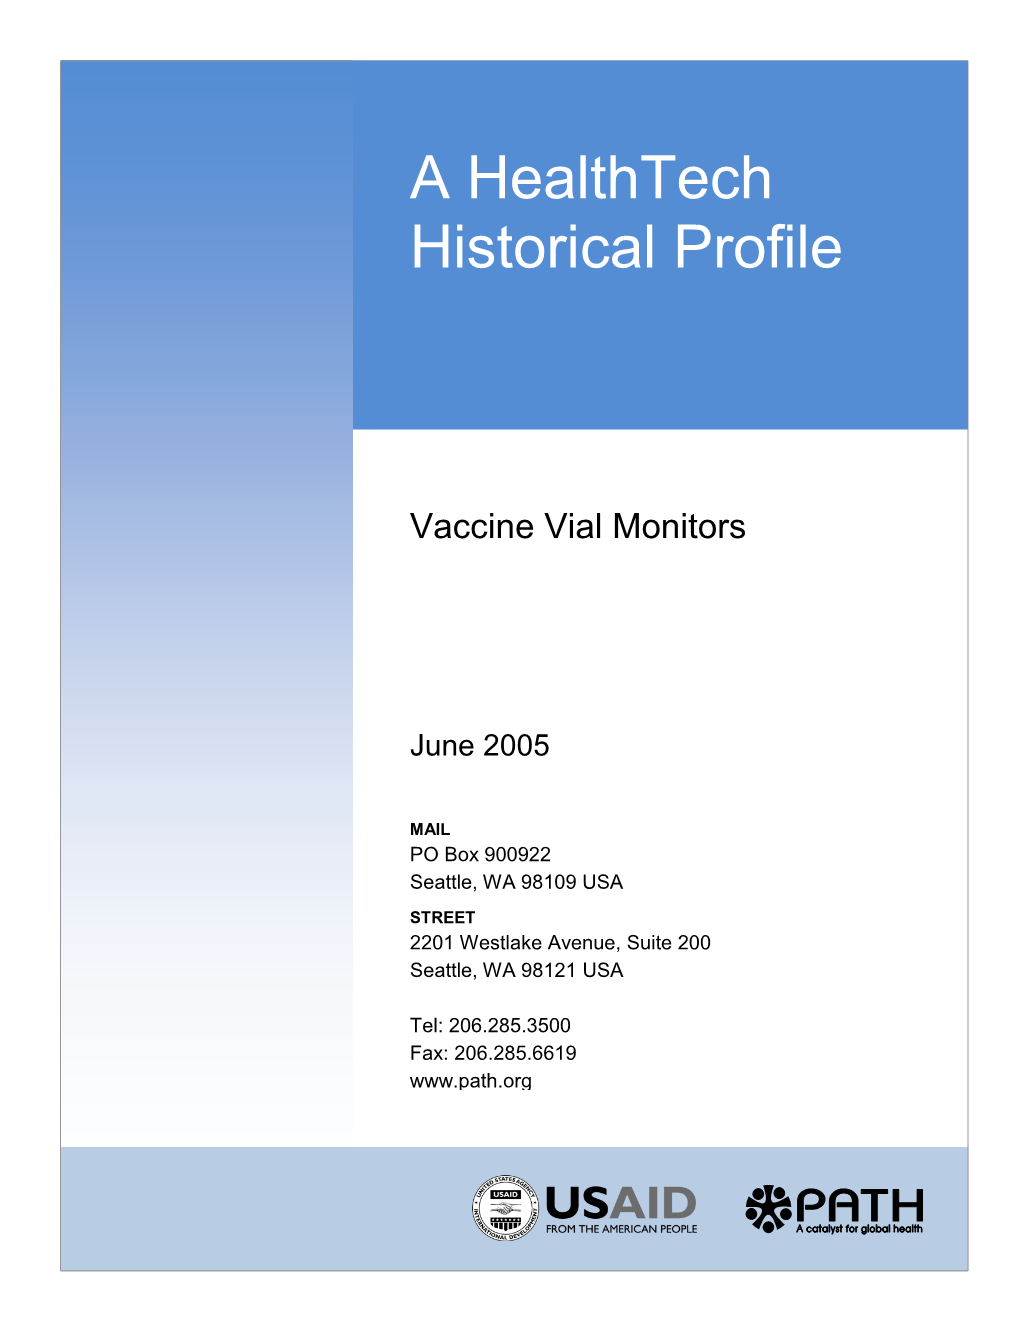 A Healthtech Historical Profile: Vaccine Vial Monitors